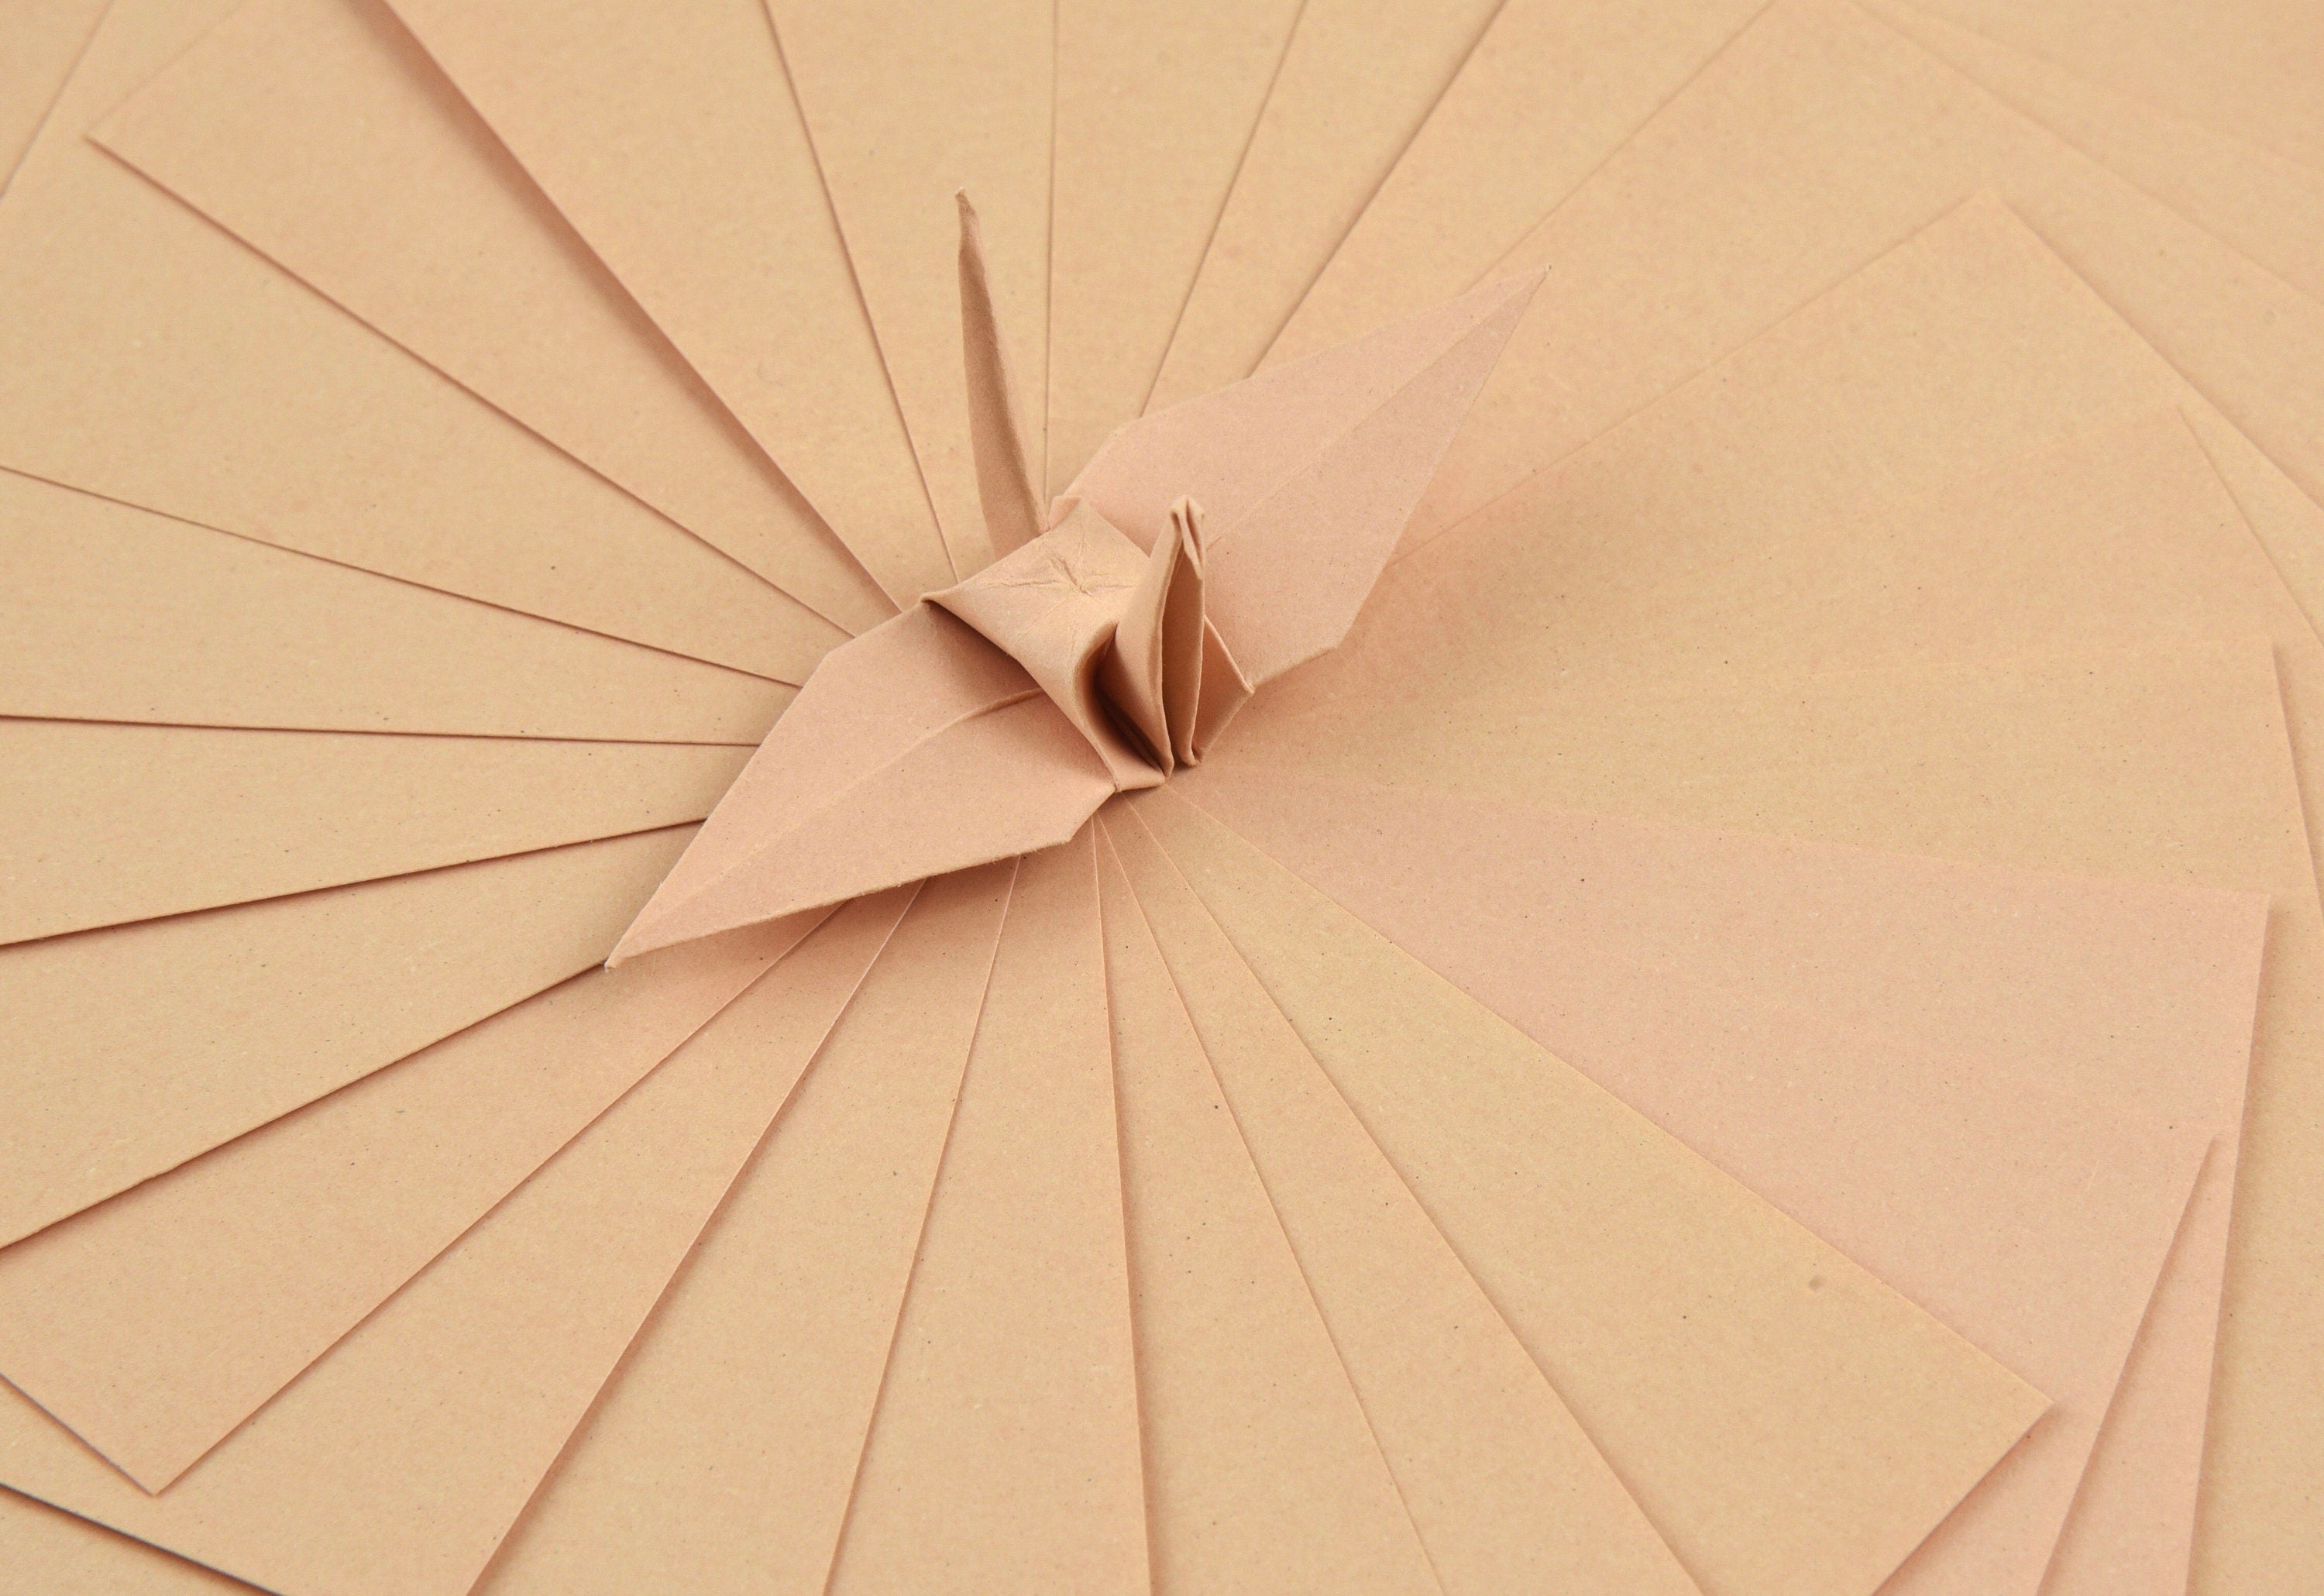 100 fogli di carta origami base - 6x6 pollici - Confezione di carta quadrata per piegatura, gru origami e decorazioni - S02